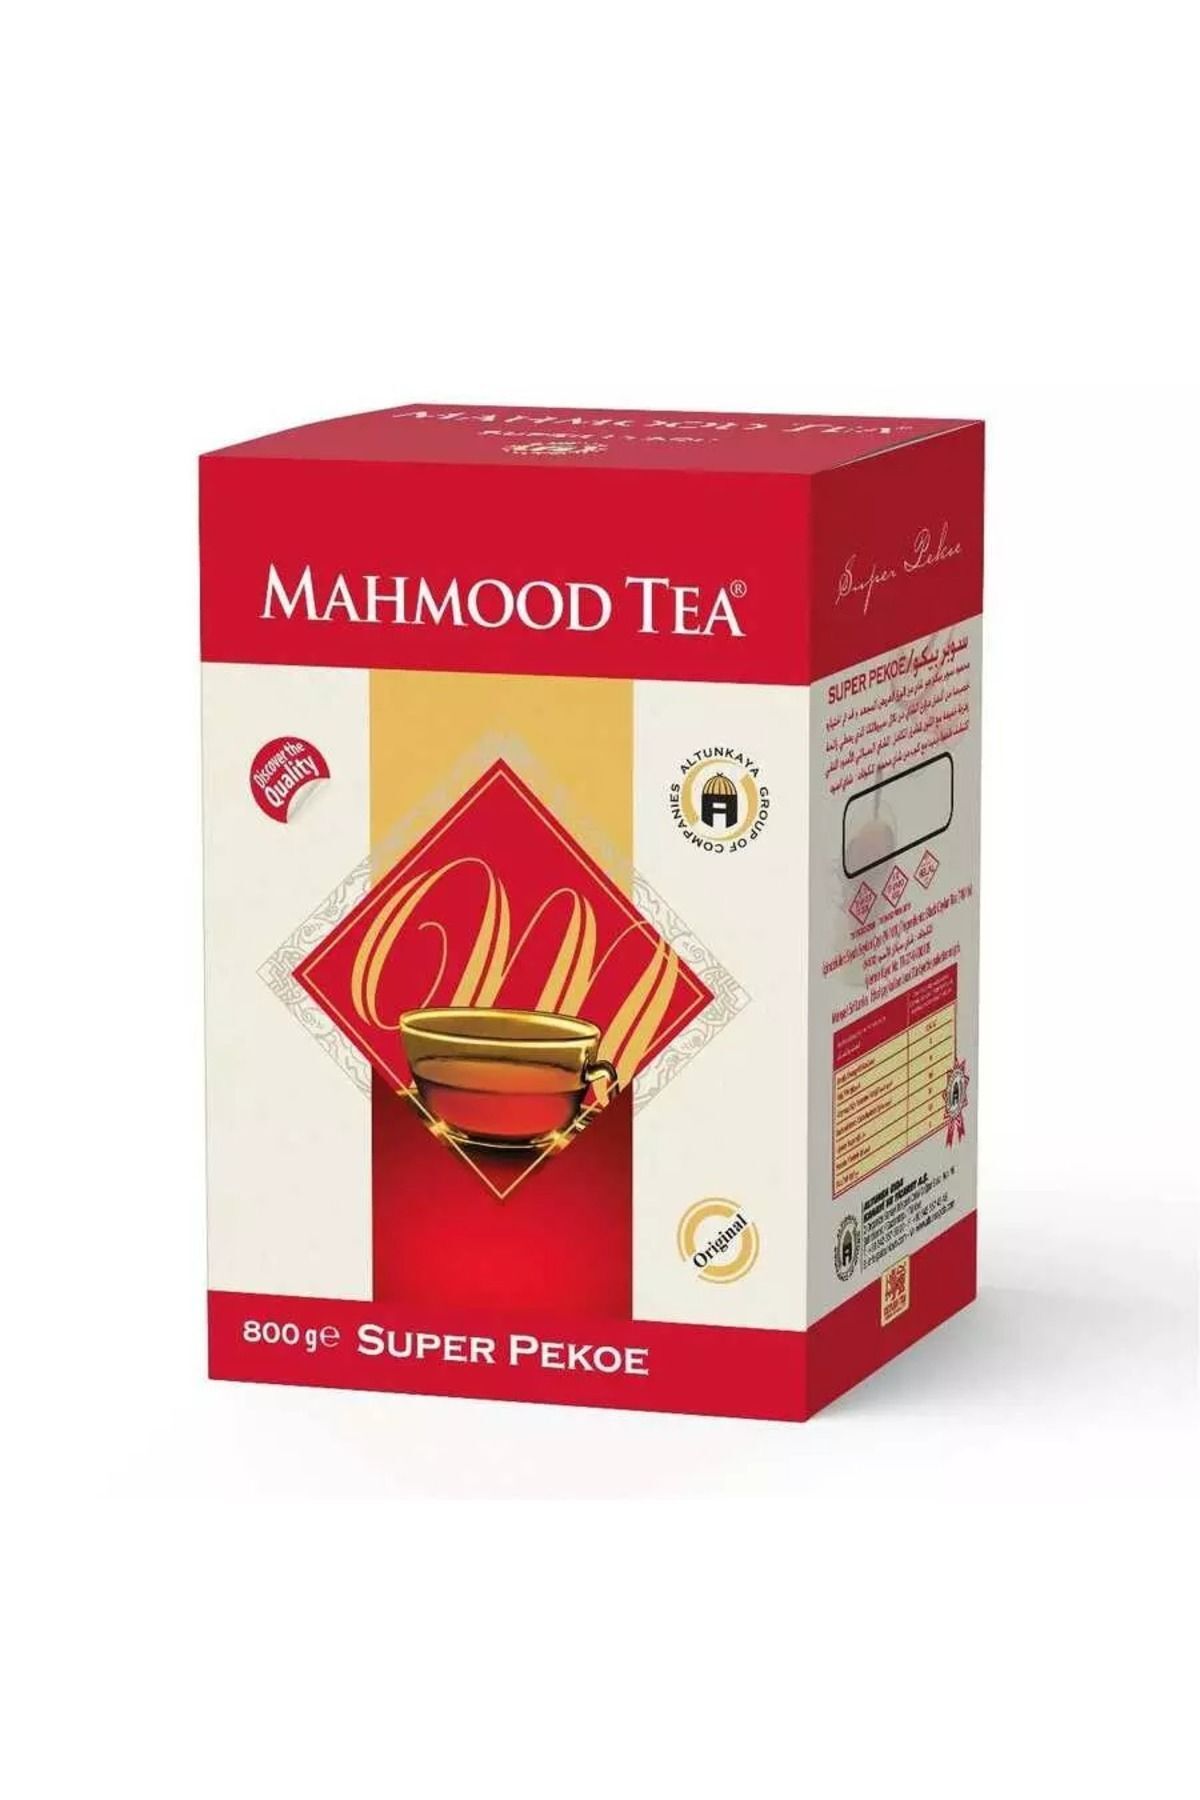 Mahmood Tea Super Pekoe Ithal Seylan Sri Lanka Ceylon Dökme Çayı 800 gr